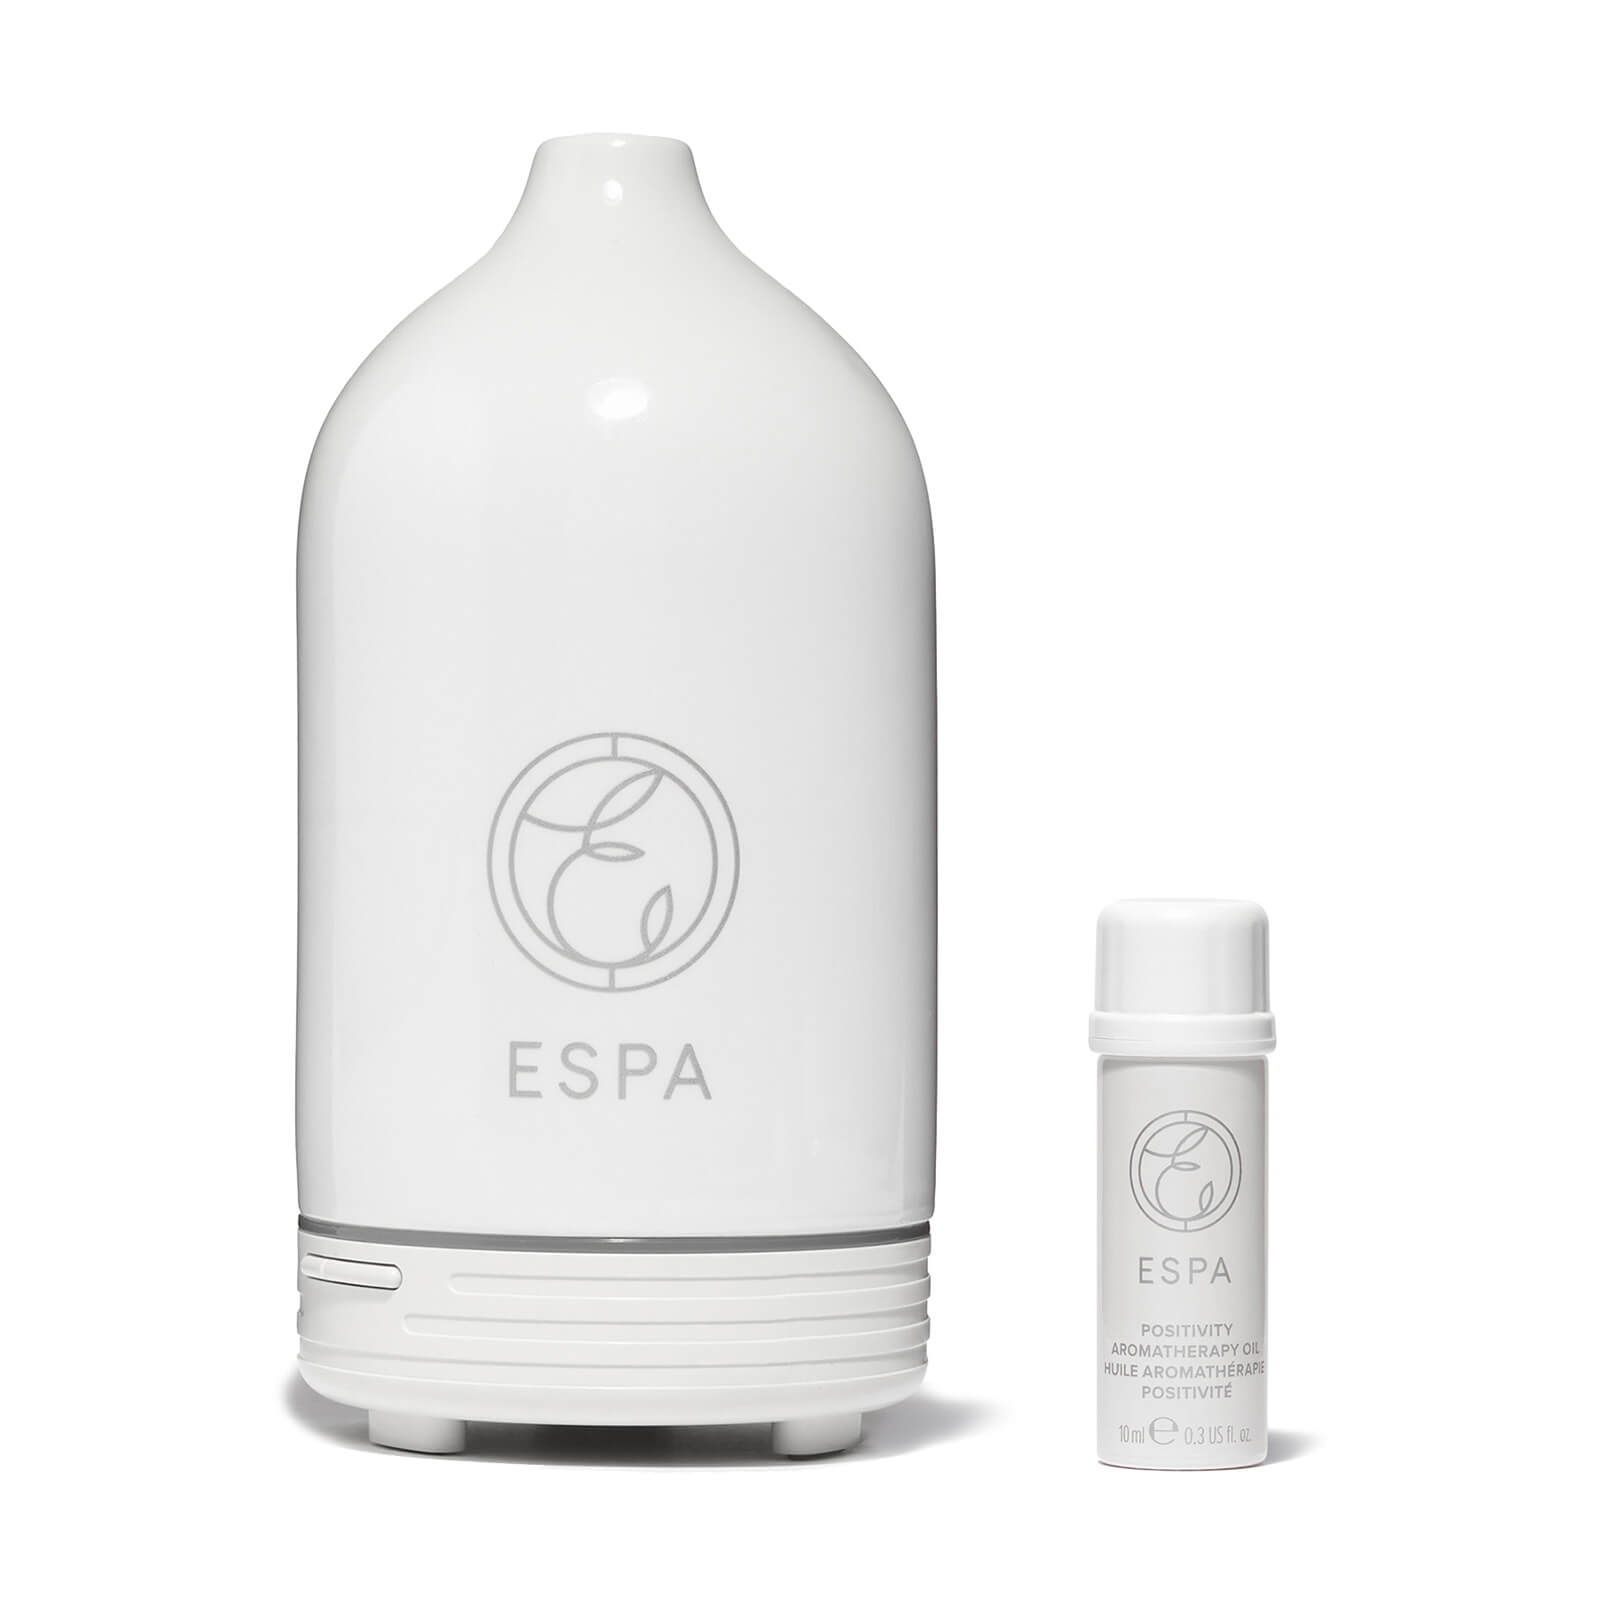 Espa Aromatherapy Essential Oil Diffuser Starter Kit - Positivity In White